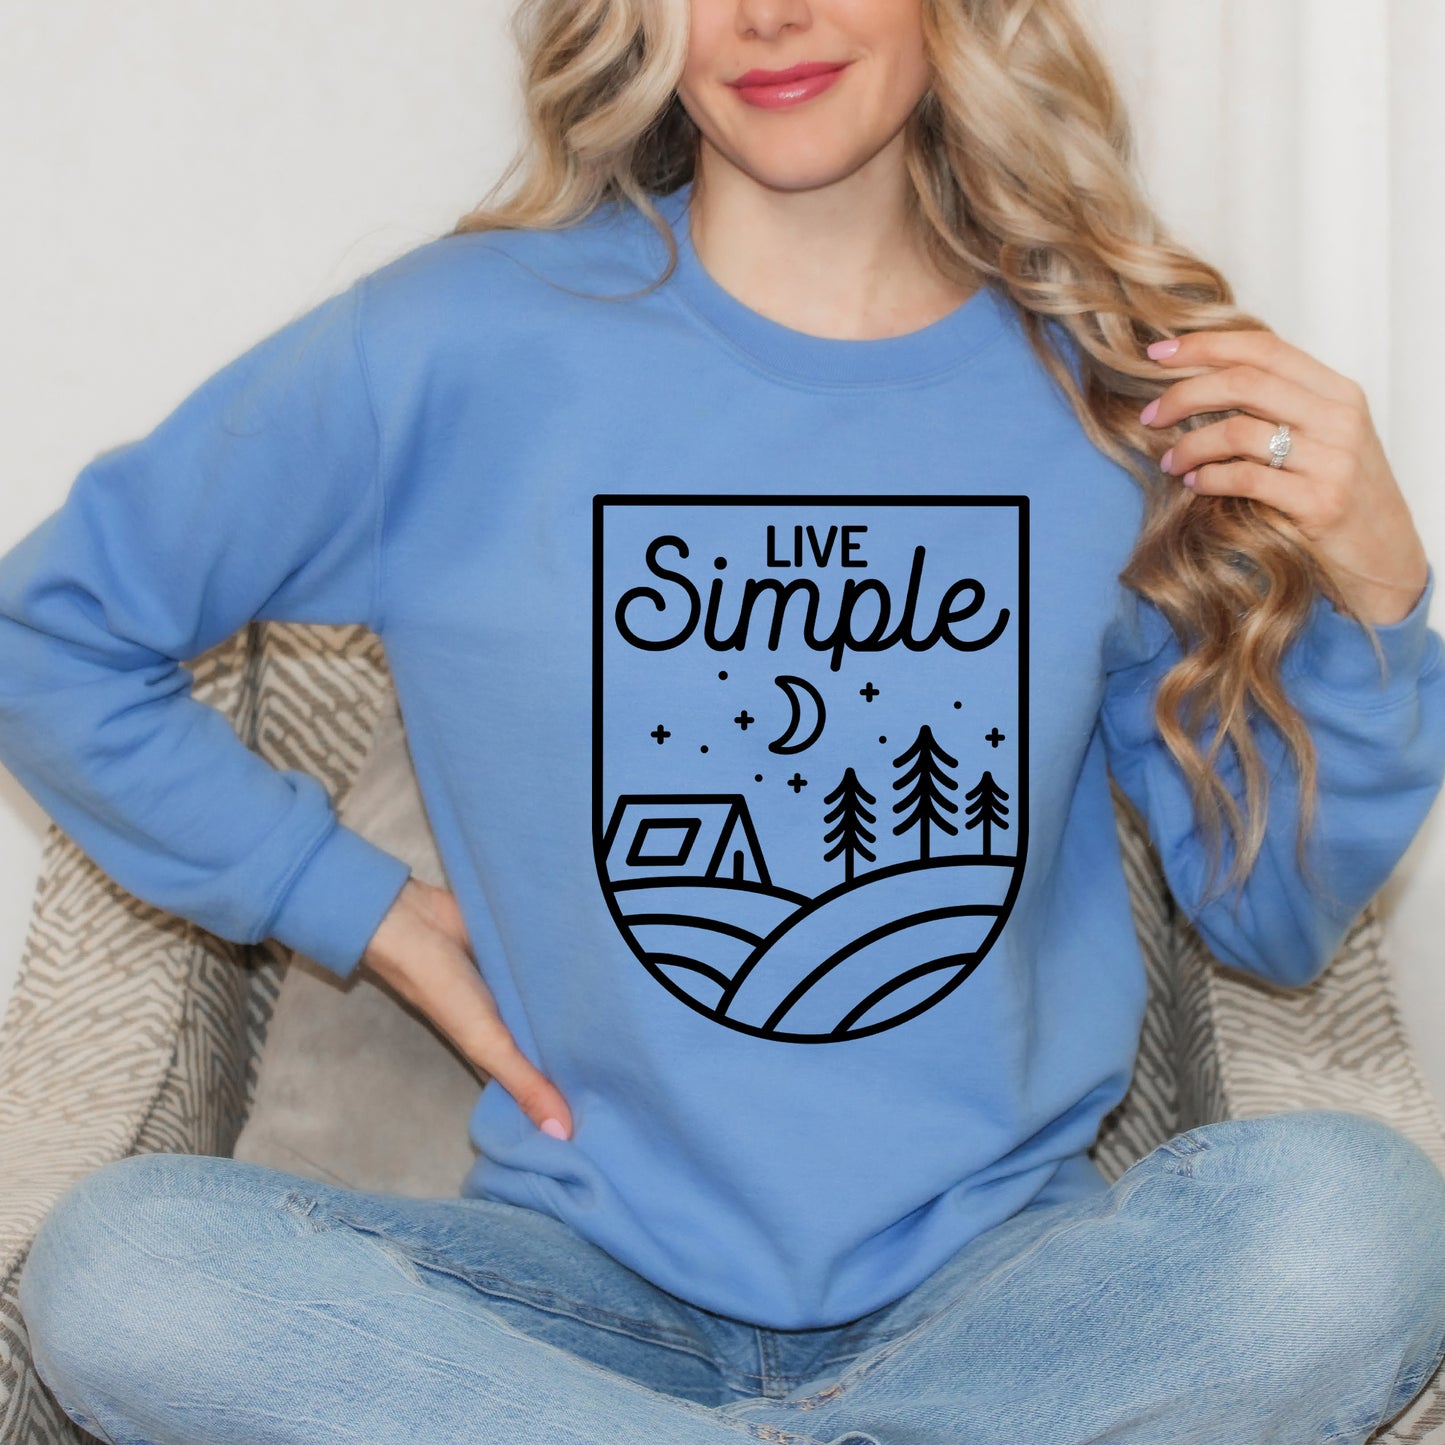 Live Simple Tent | Sweatshirt